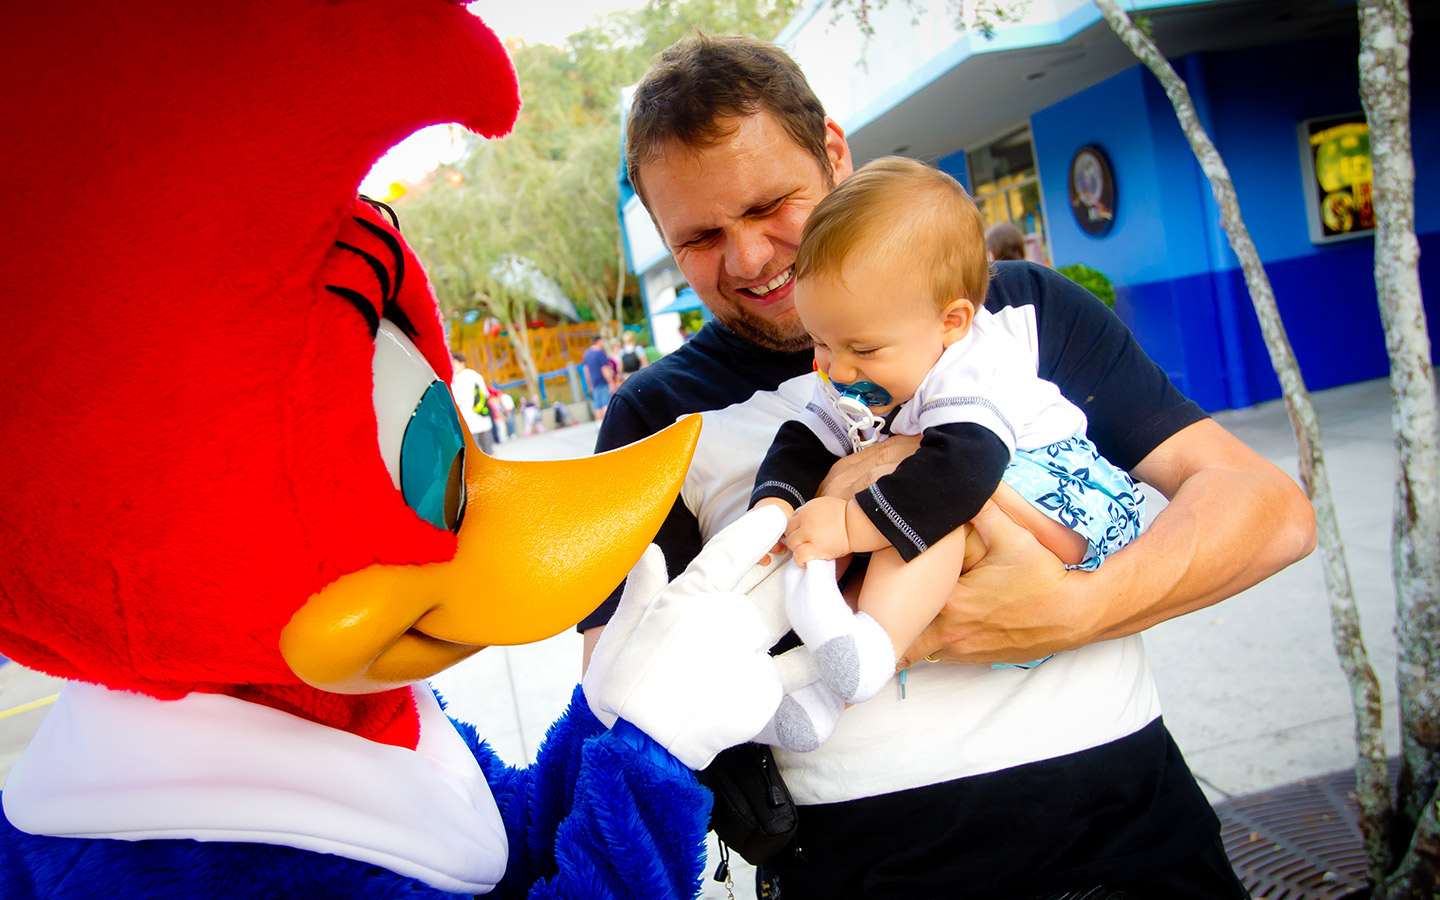 Meet fun characters like Woody Woodpecker at Universal Orlando Resort